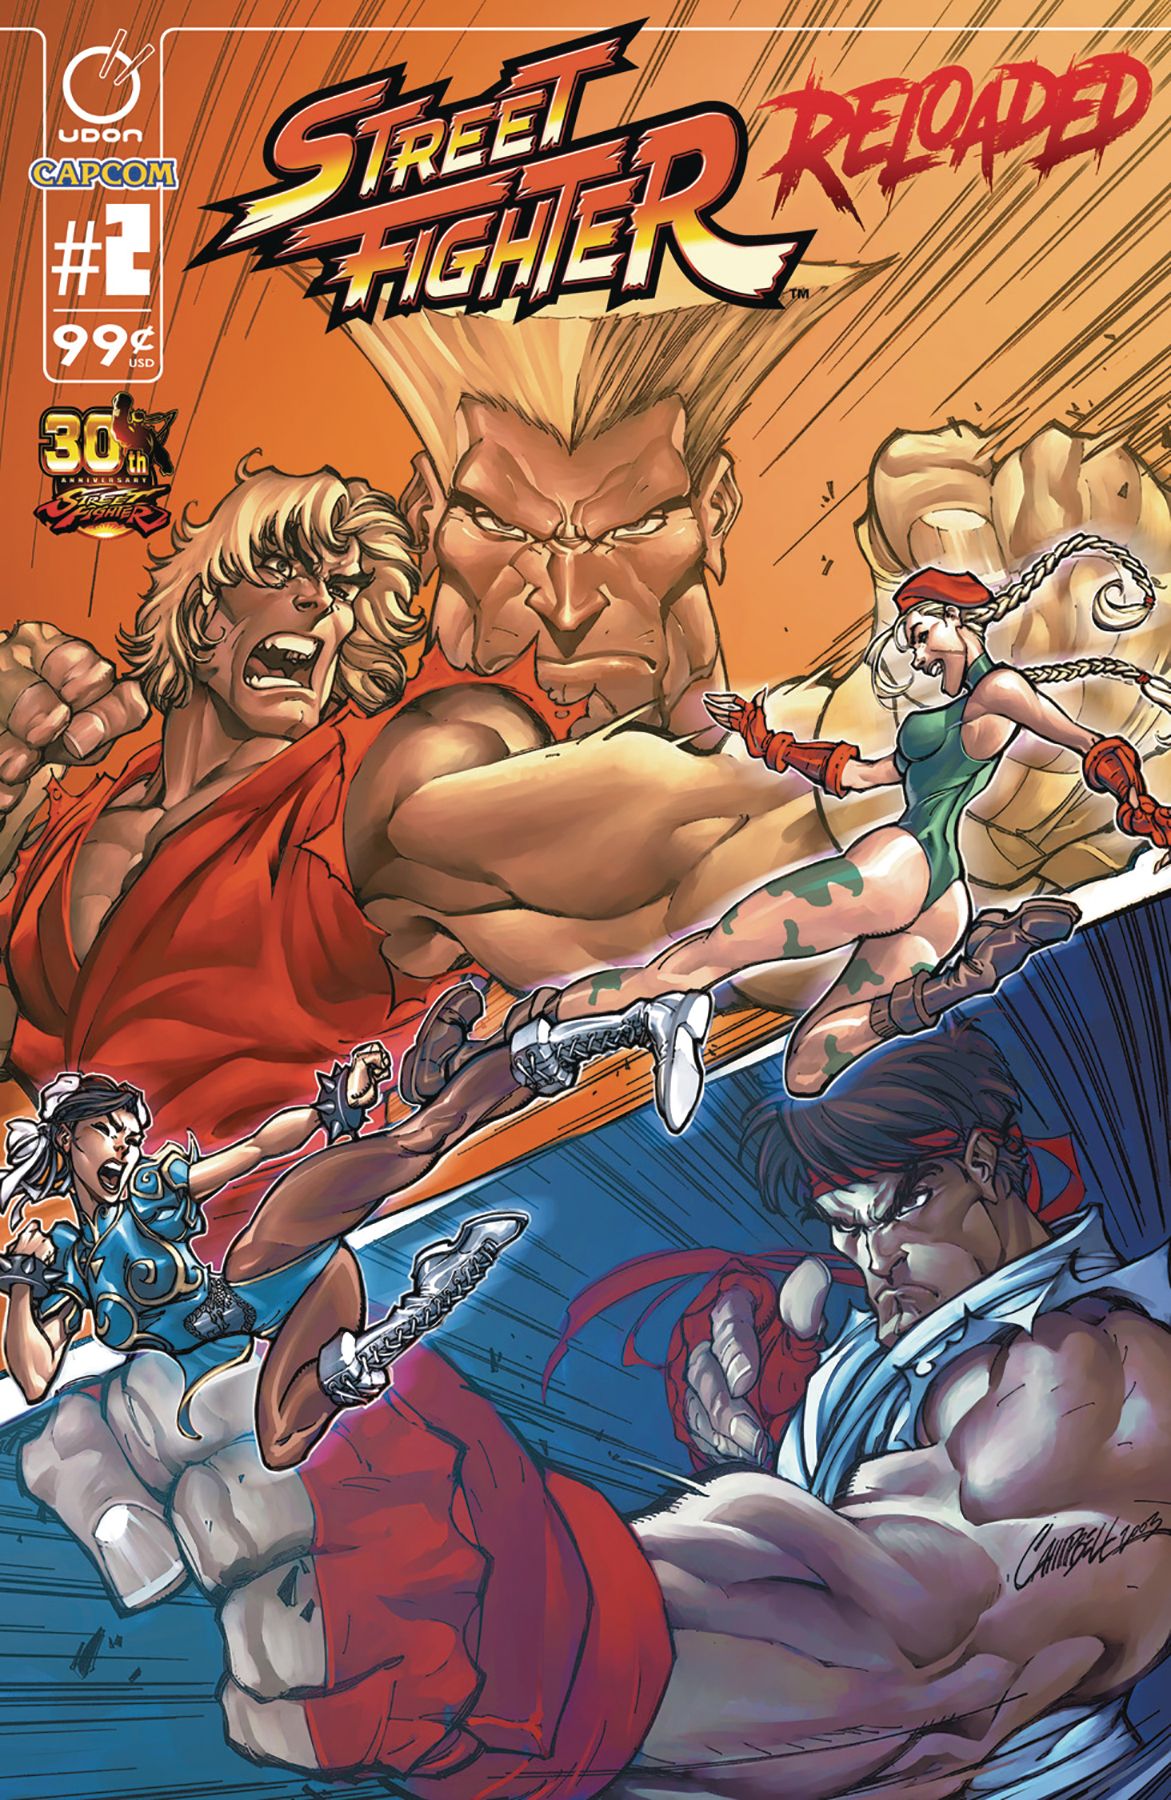 Street Fighter: Reloaded #2 Comic